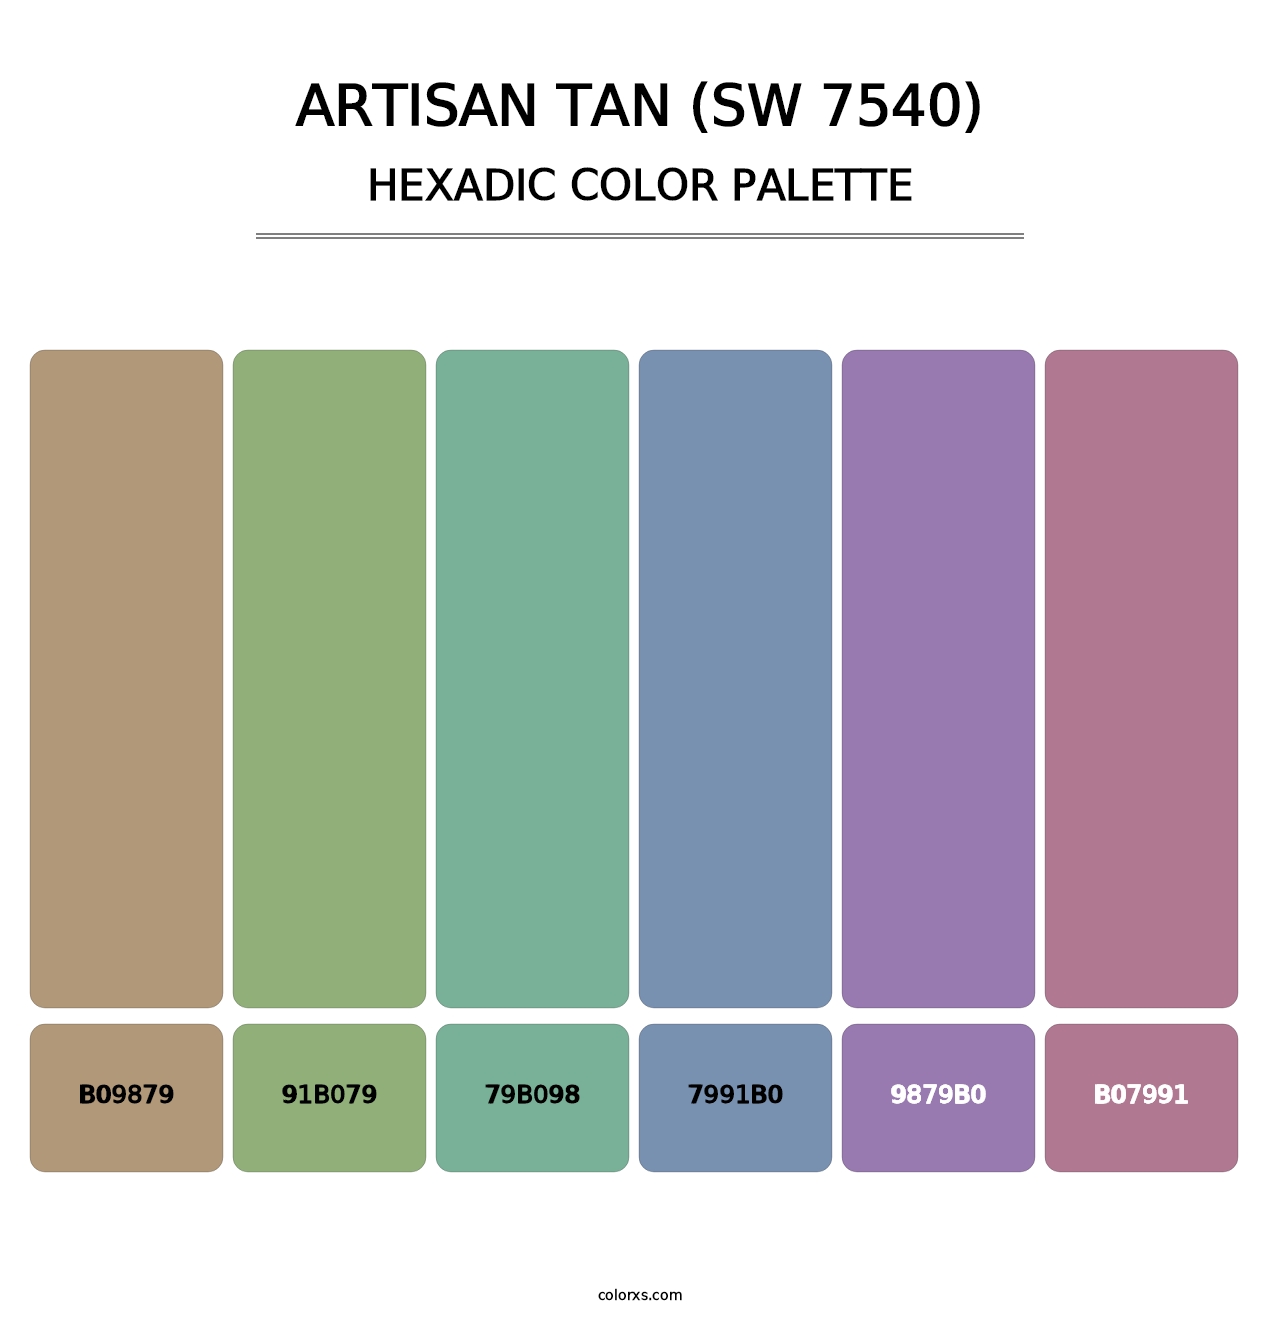 Artisan Tan (SW 7540) - Hexadic Color Palette